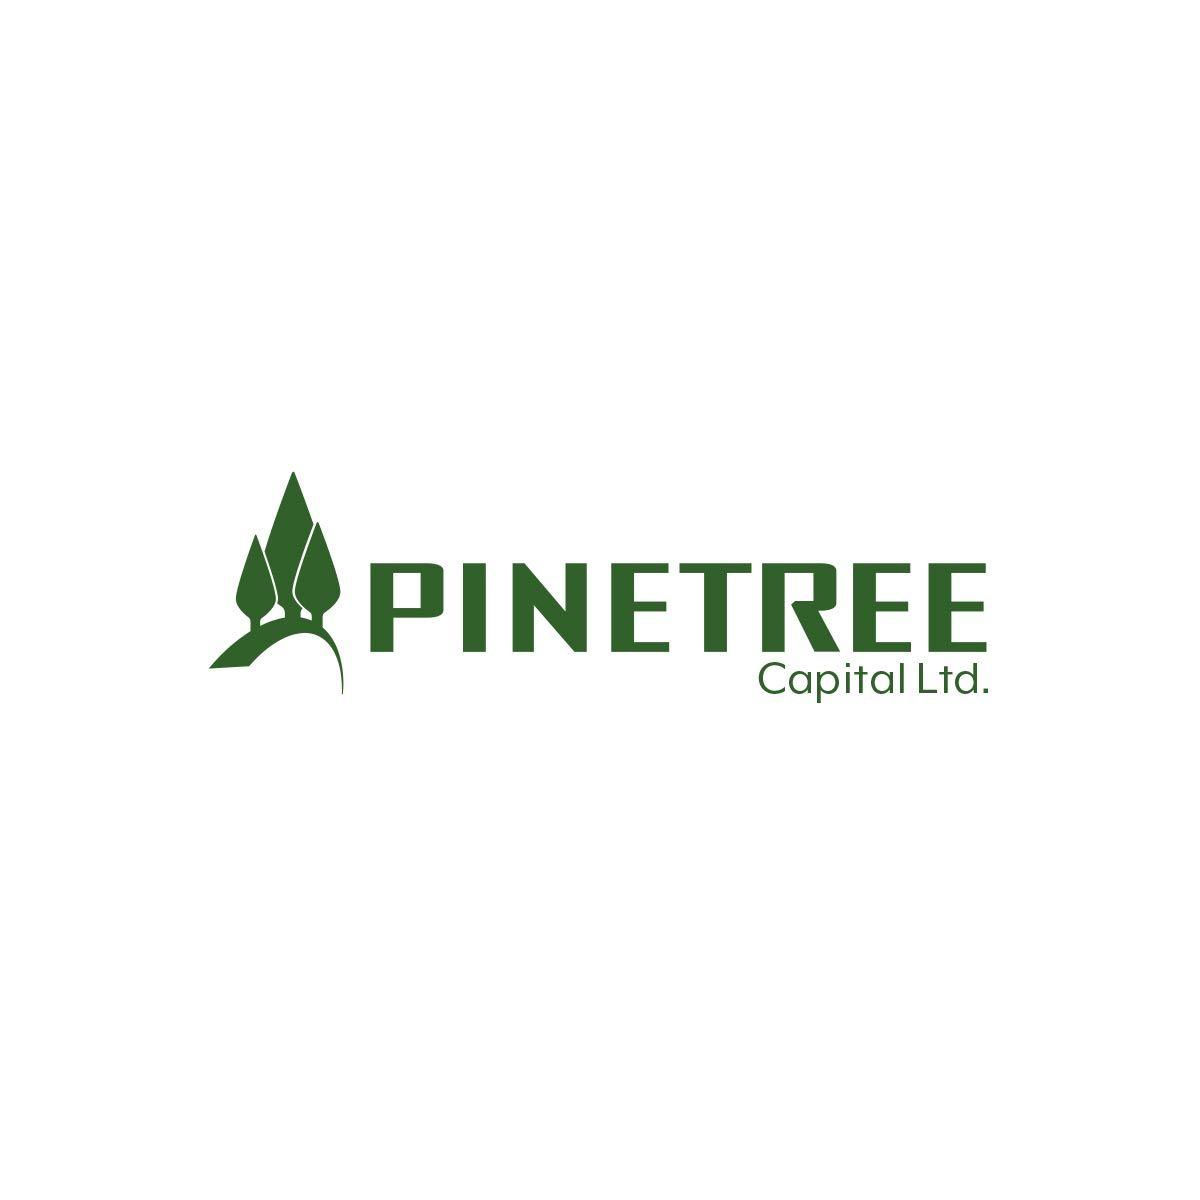 Pine Tree Company Logo - Pinetree Capital - Home